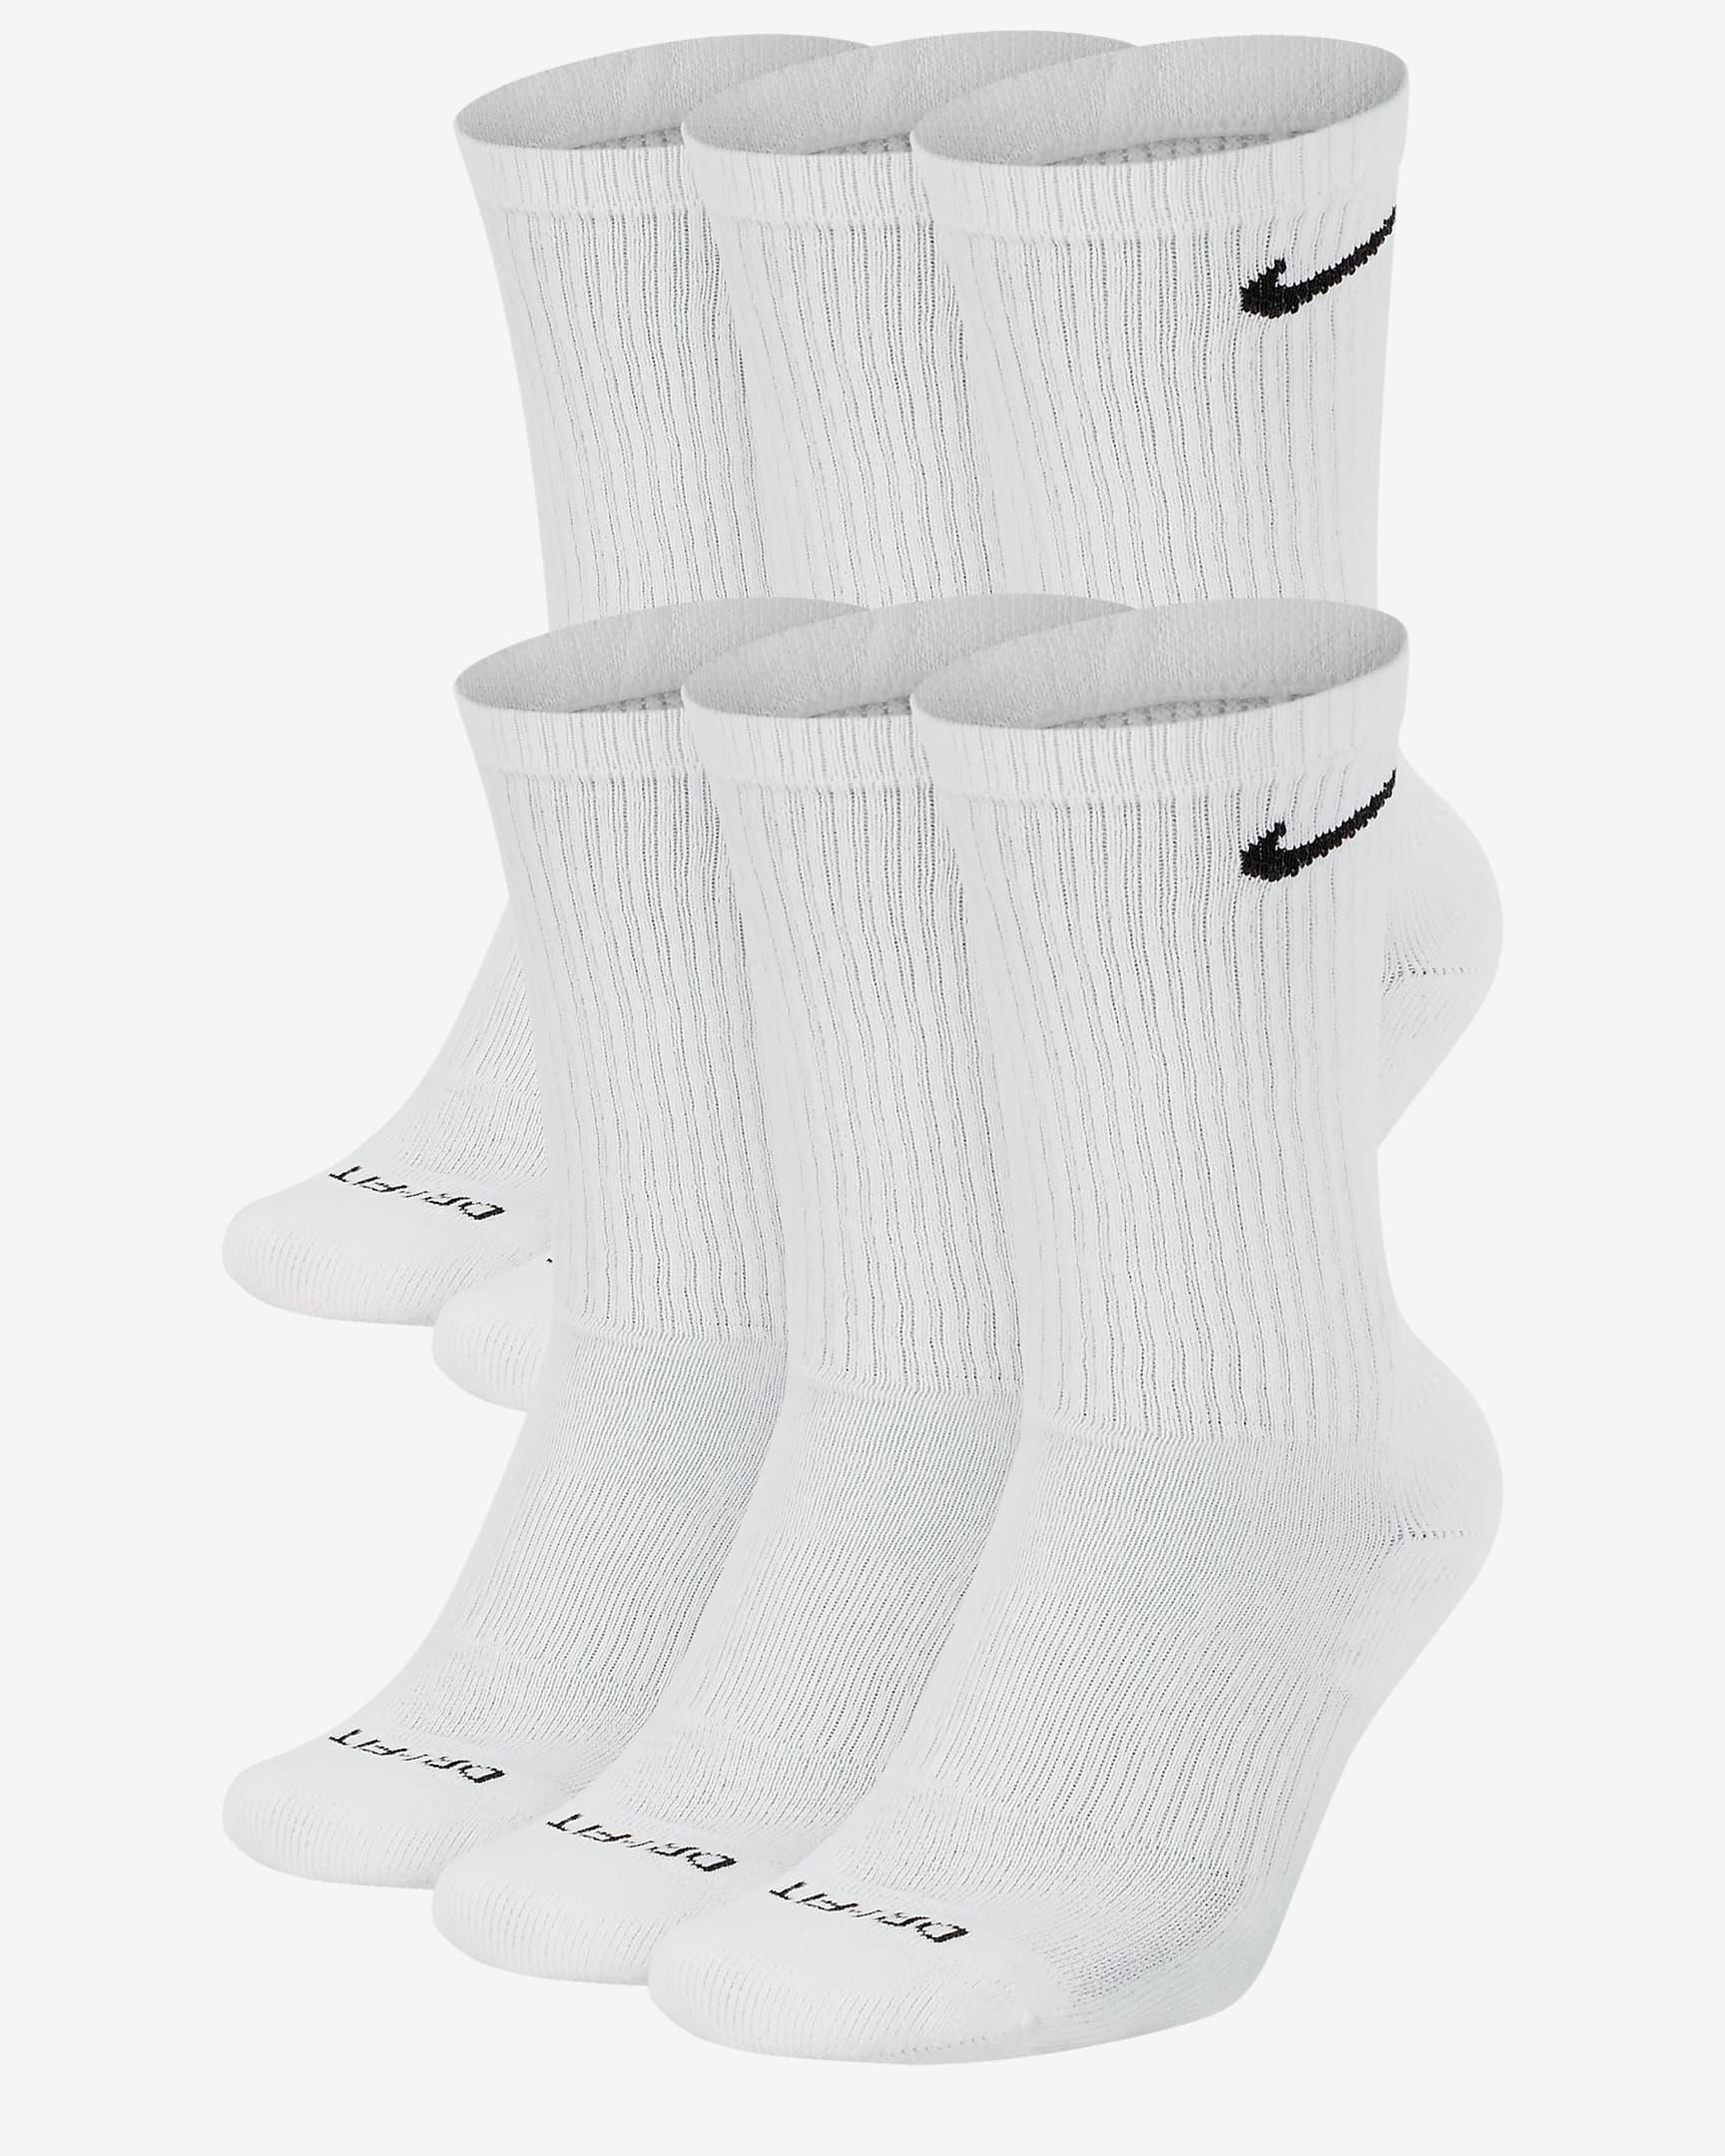 Nike Mid-Calf Socks Are The Best 